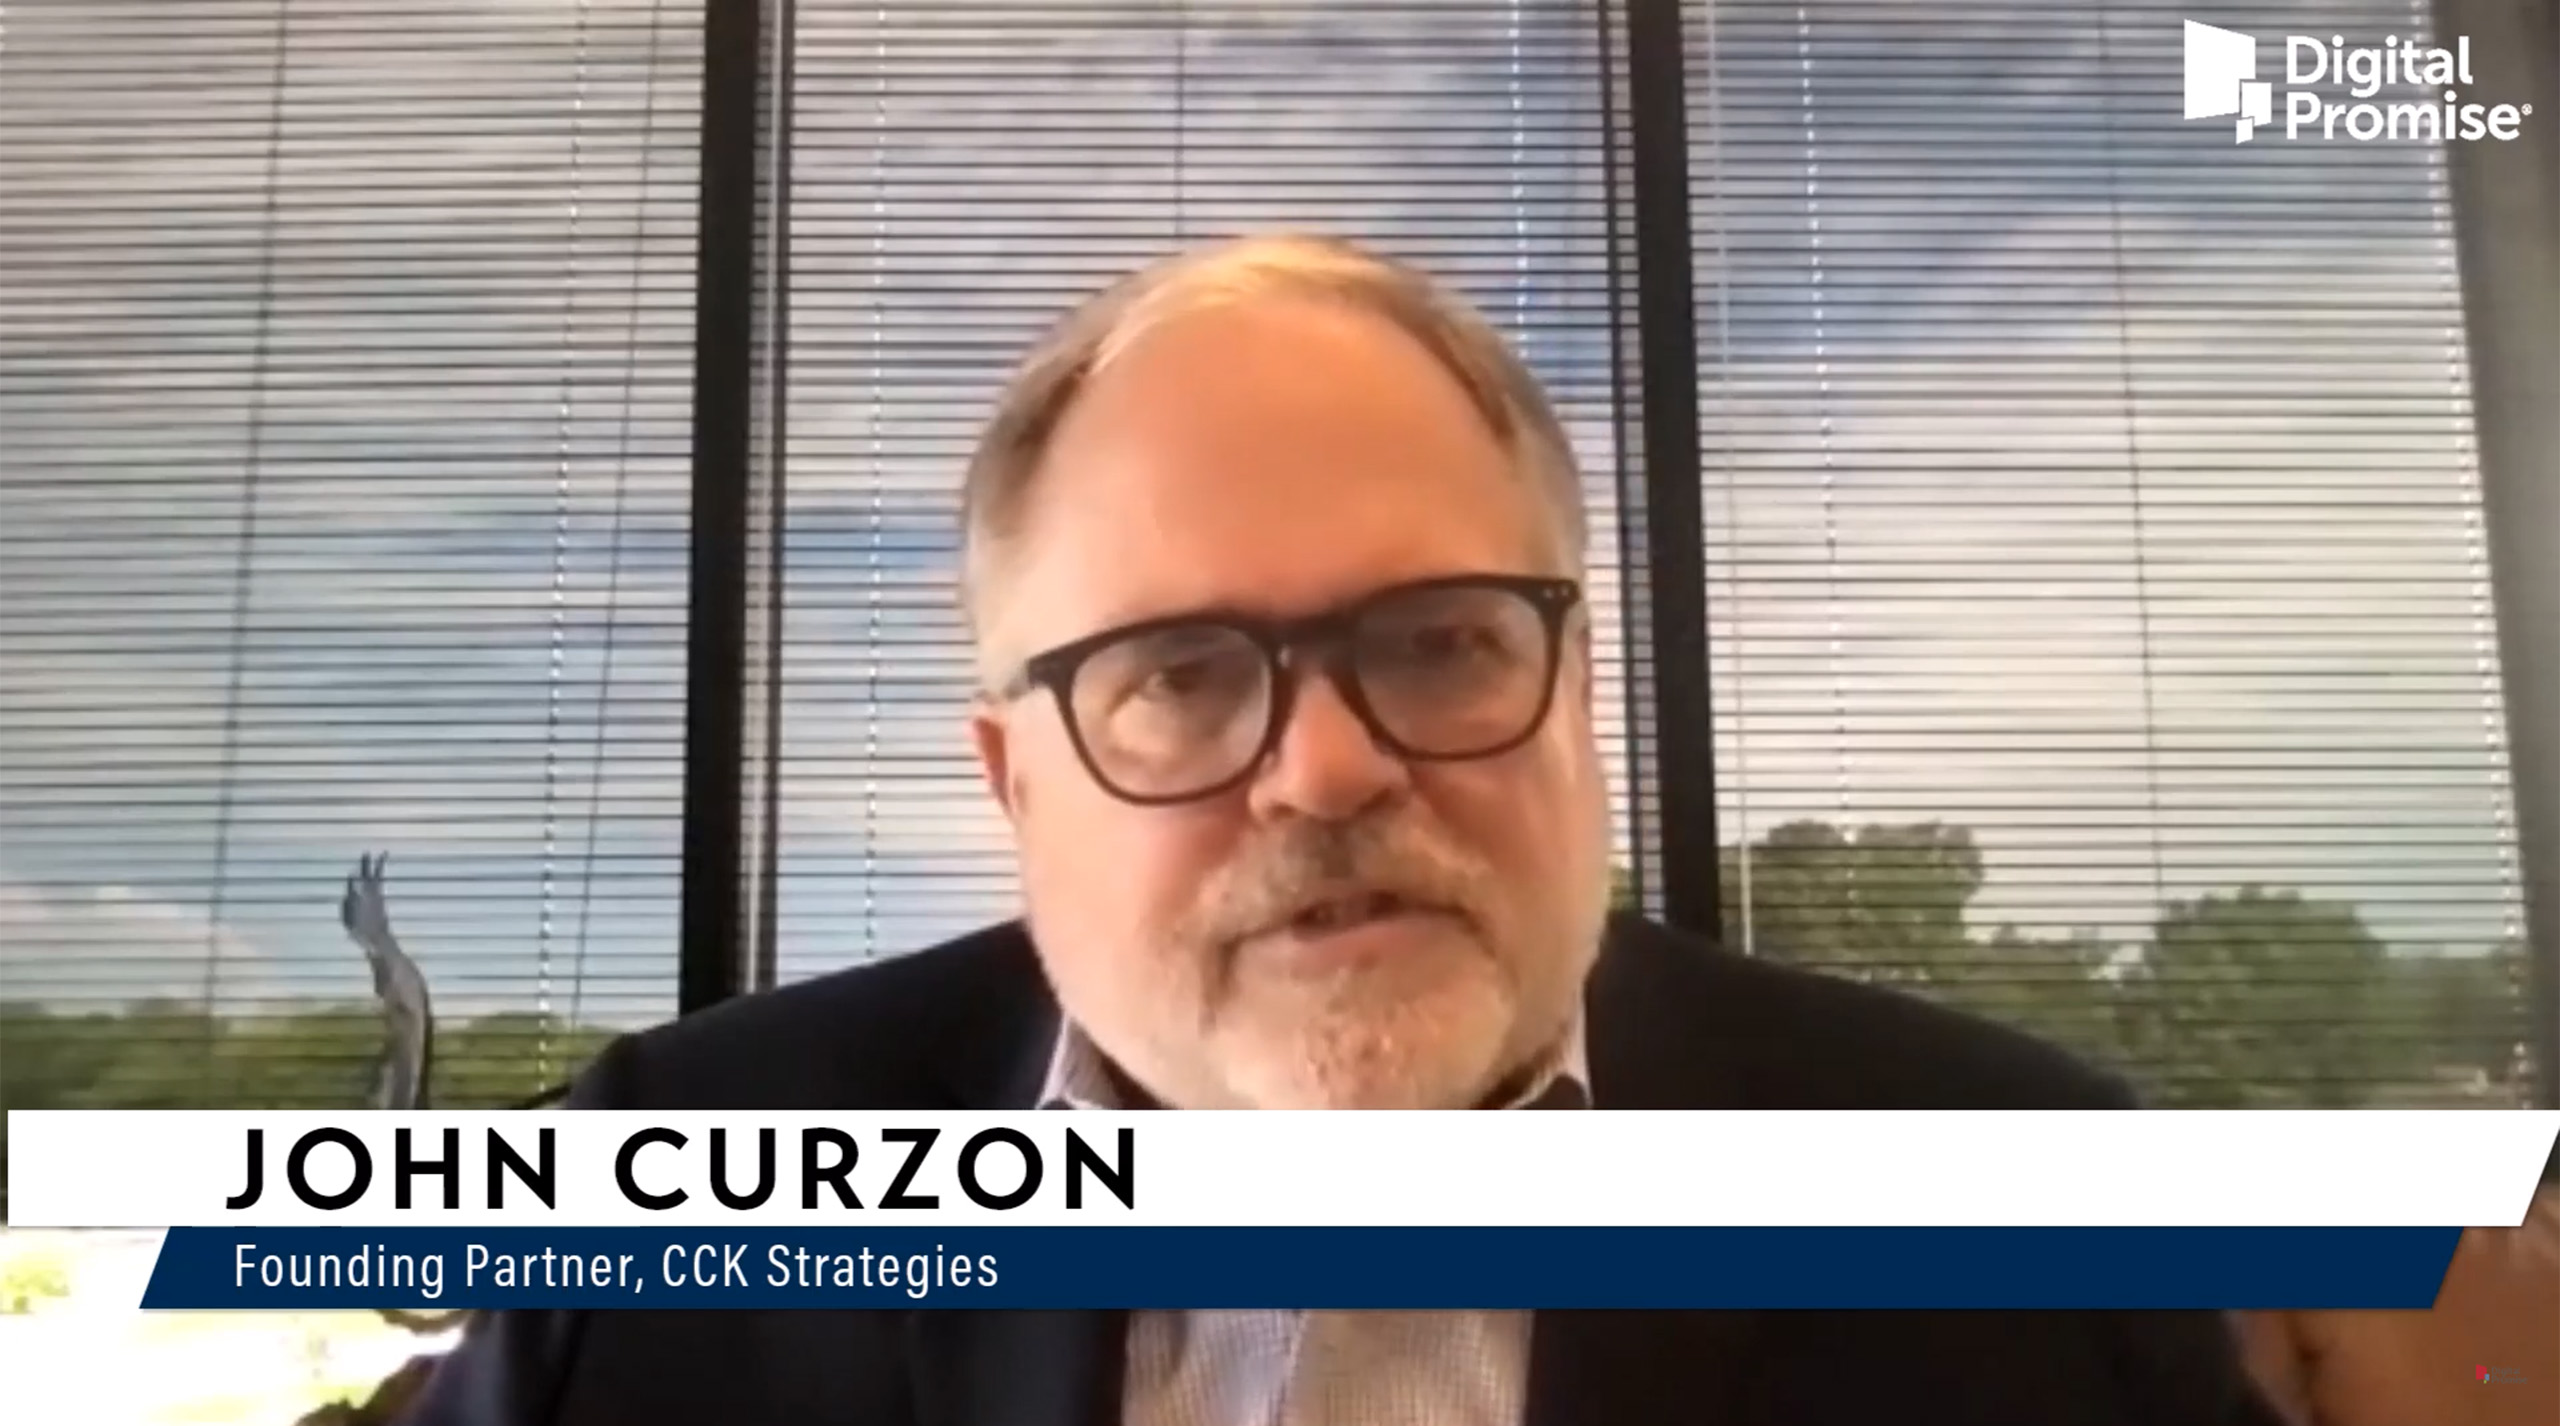 John Curzon Founding Partner, CCK Strategies